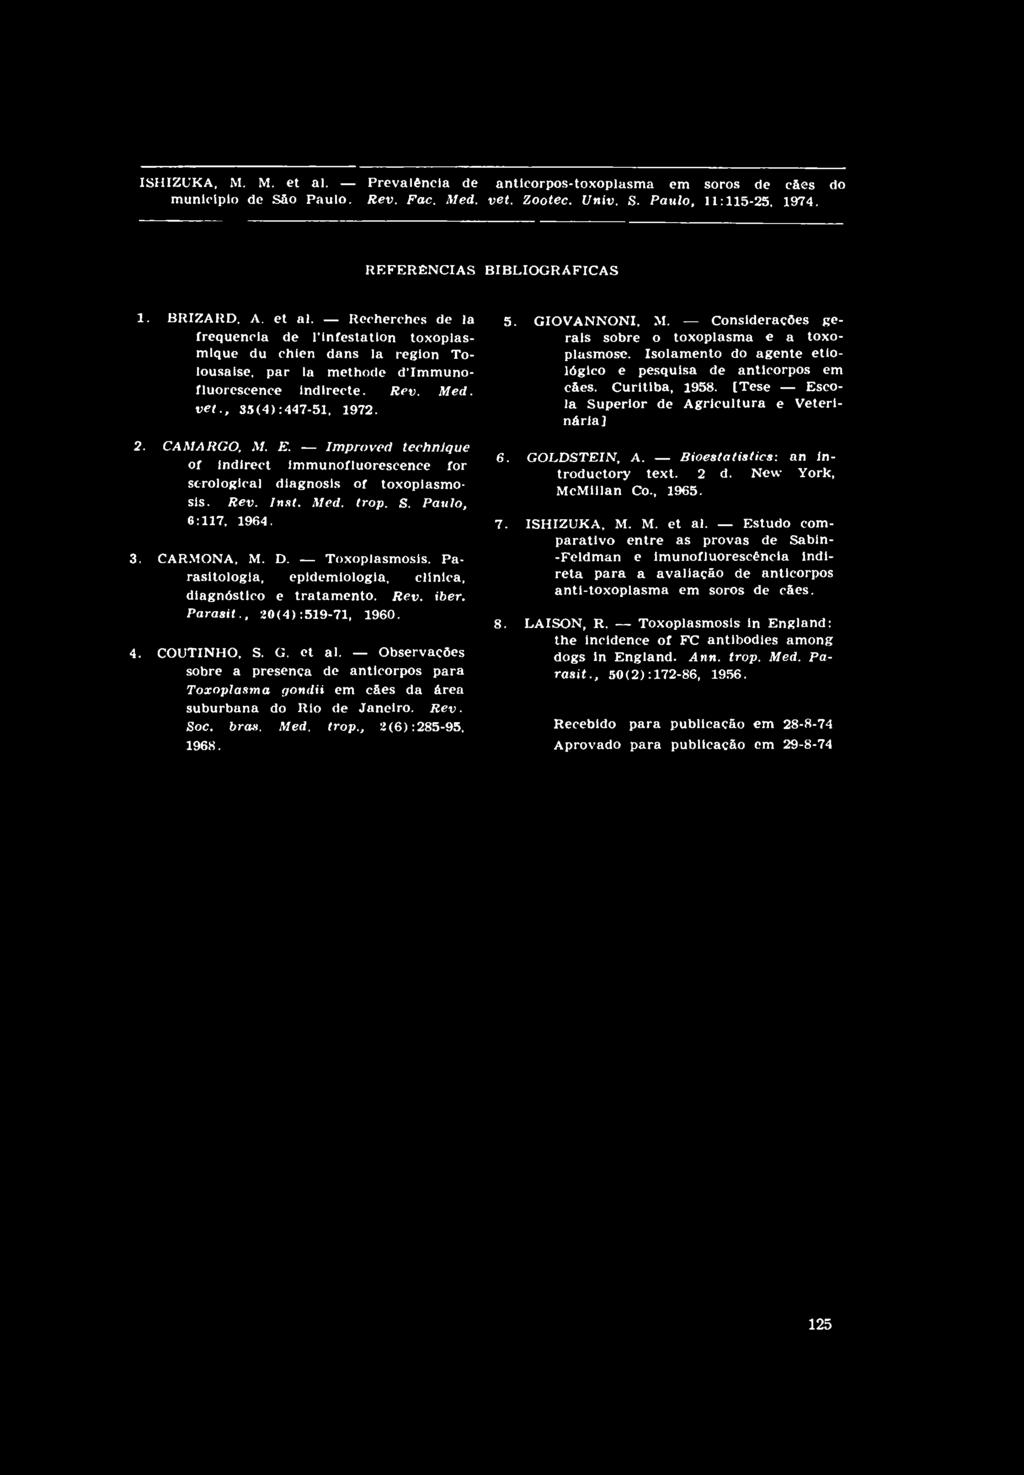 D. Toxoplasmosis. Parasitologia, epldemiologia, clinica, diagnóstico e tratamento. Rev. iber. Parasit., 20(4) :519-71, 1960. 4. COUTINHO, S. G. et al.